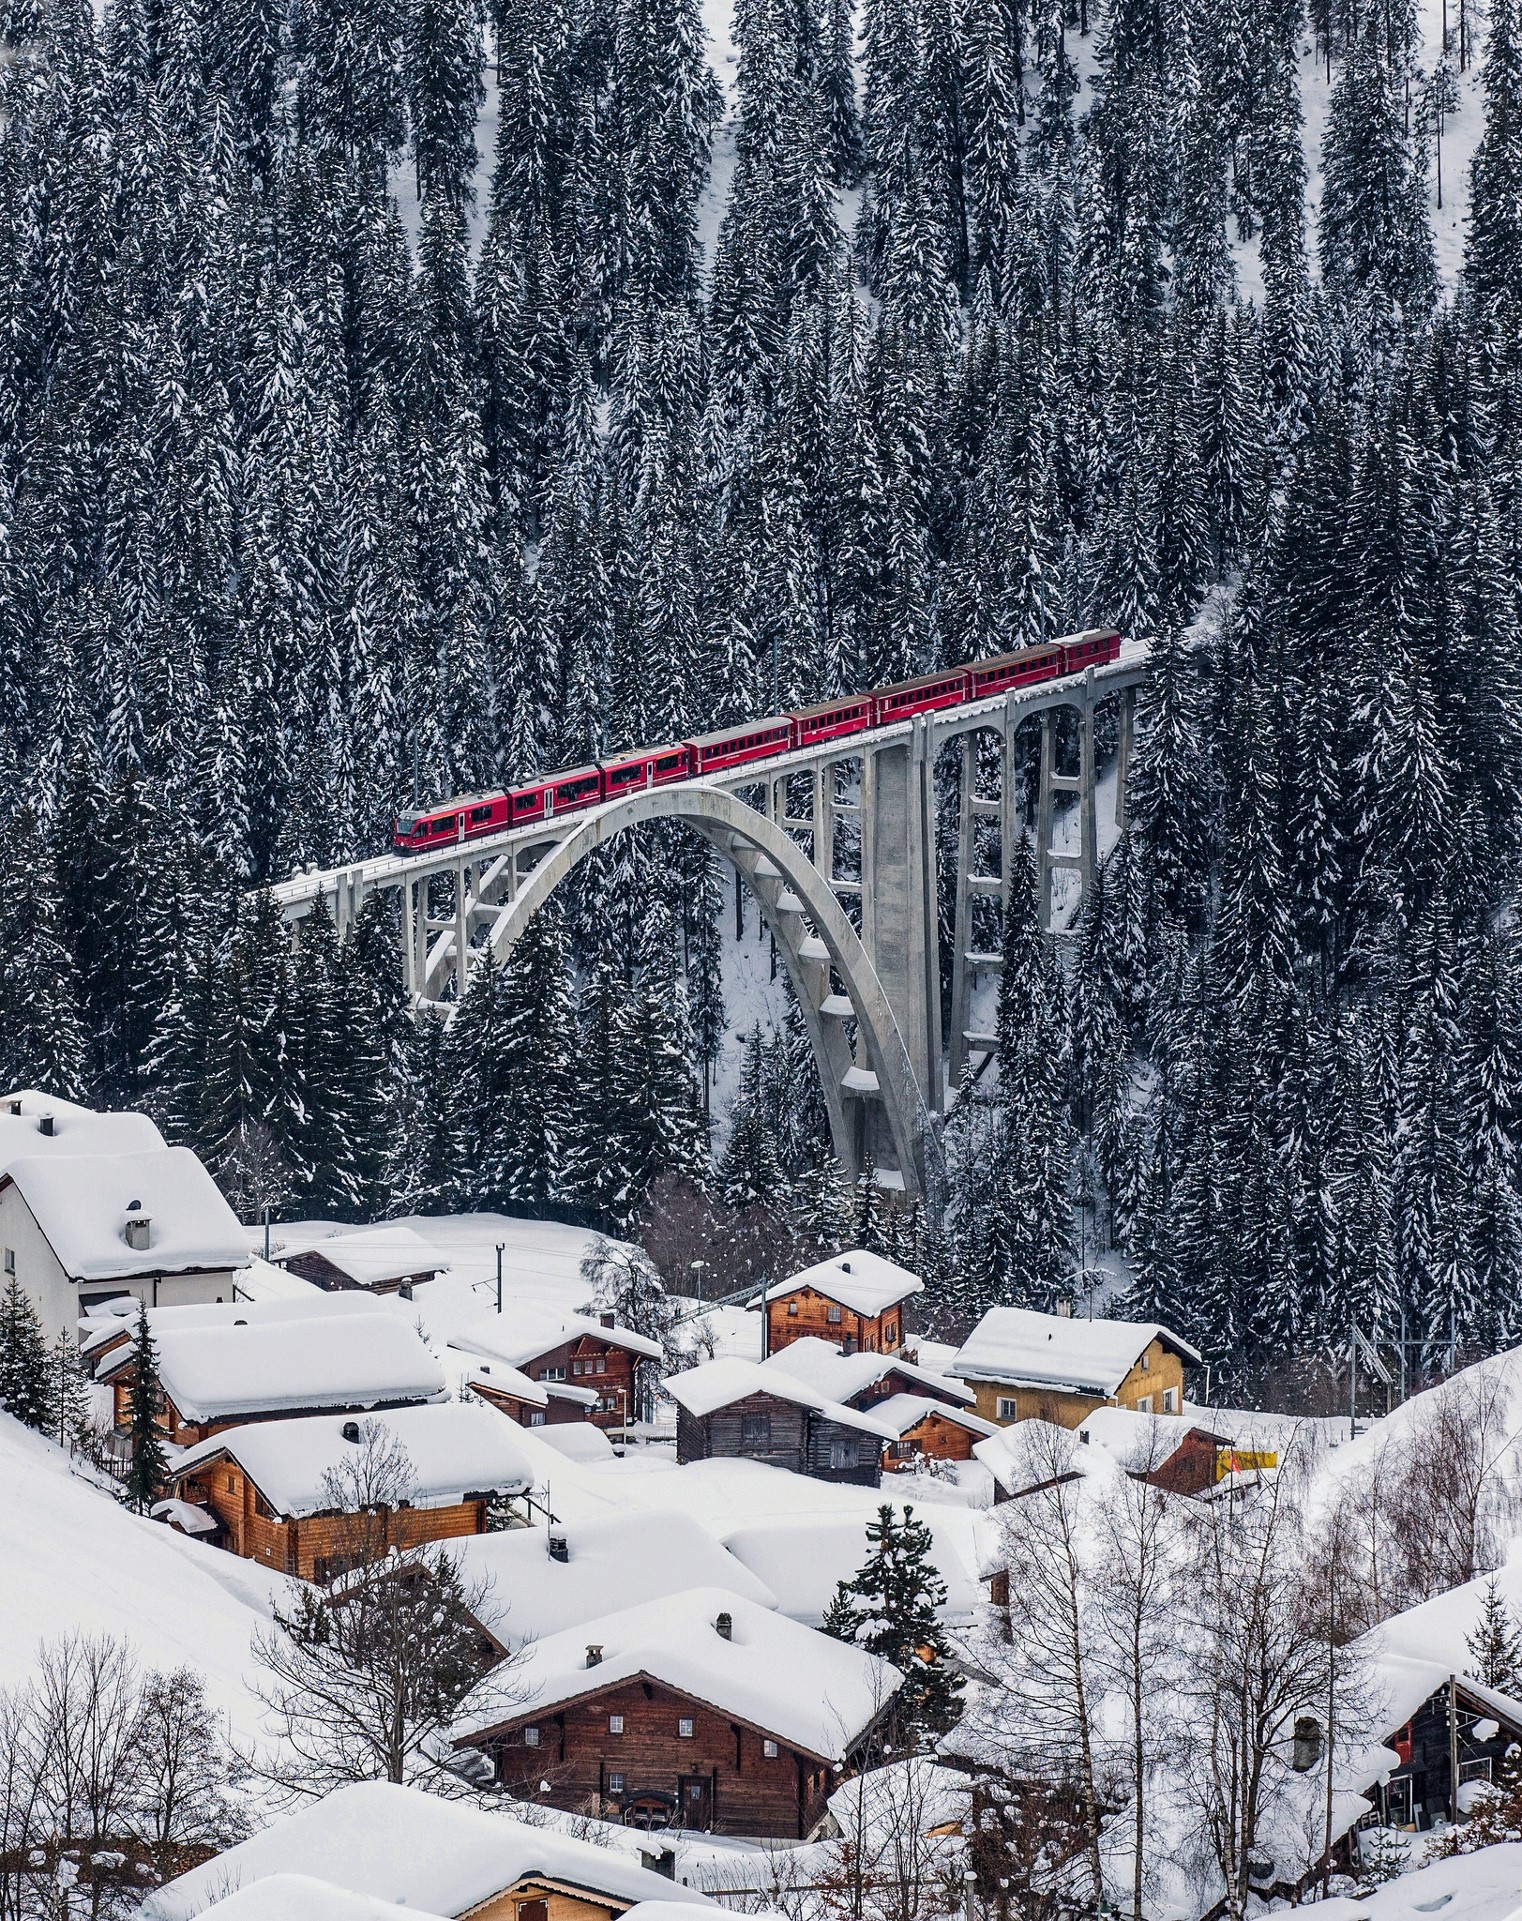 General 1522x1921 train bridge Switzerland winter trees snow vehicle rooftops village viaduct portrait display